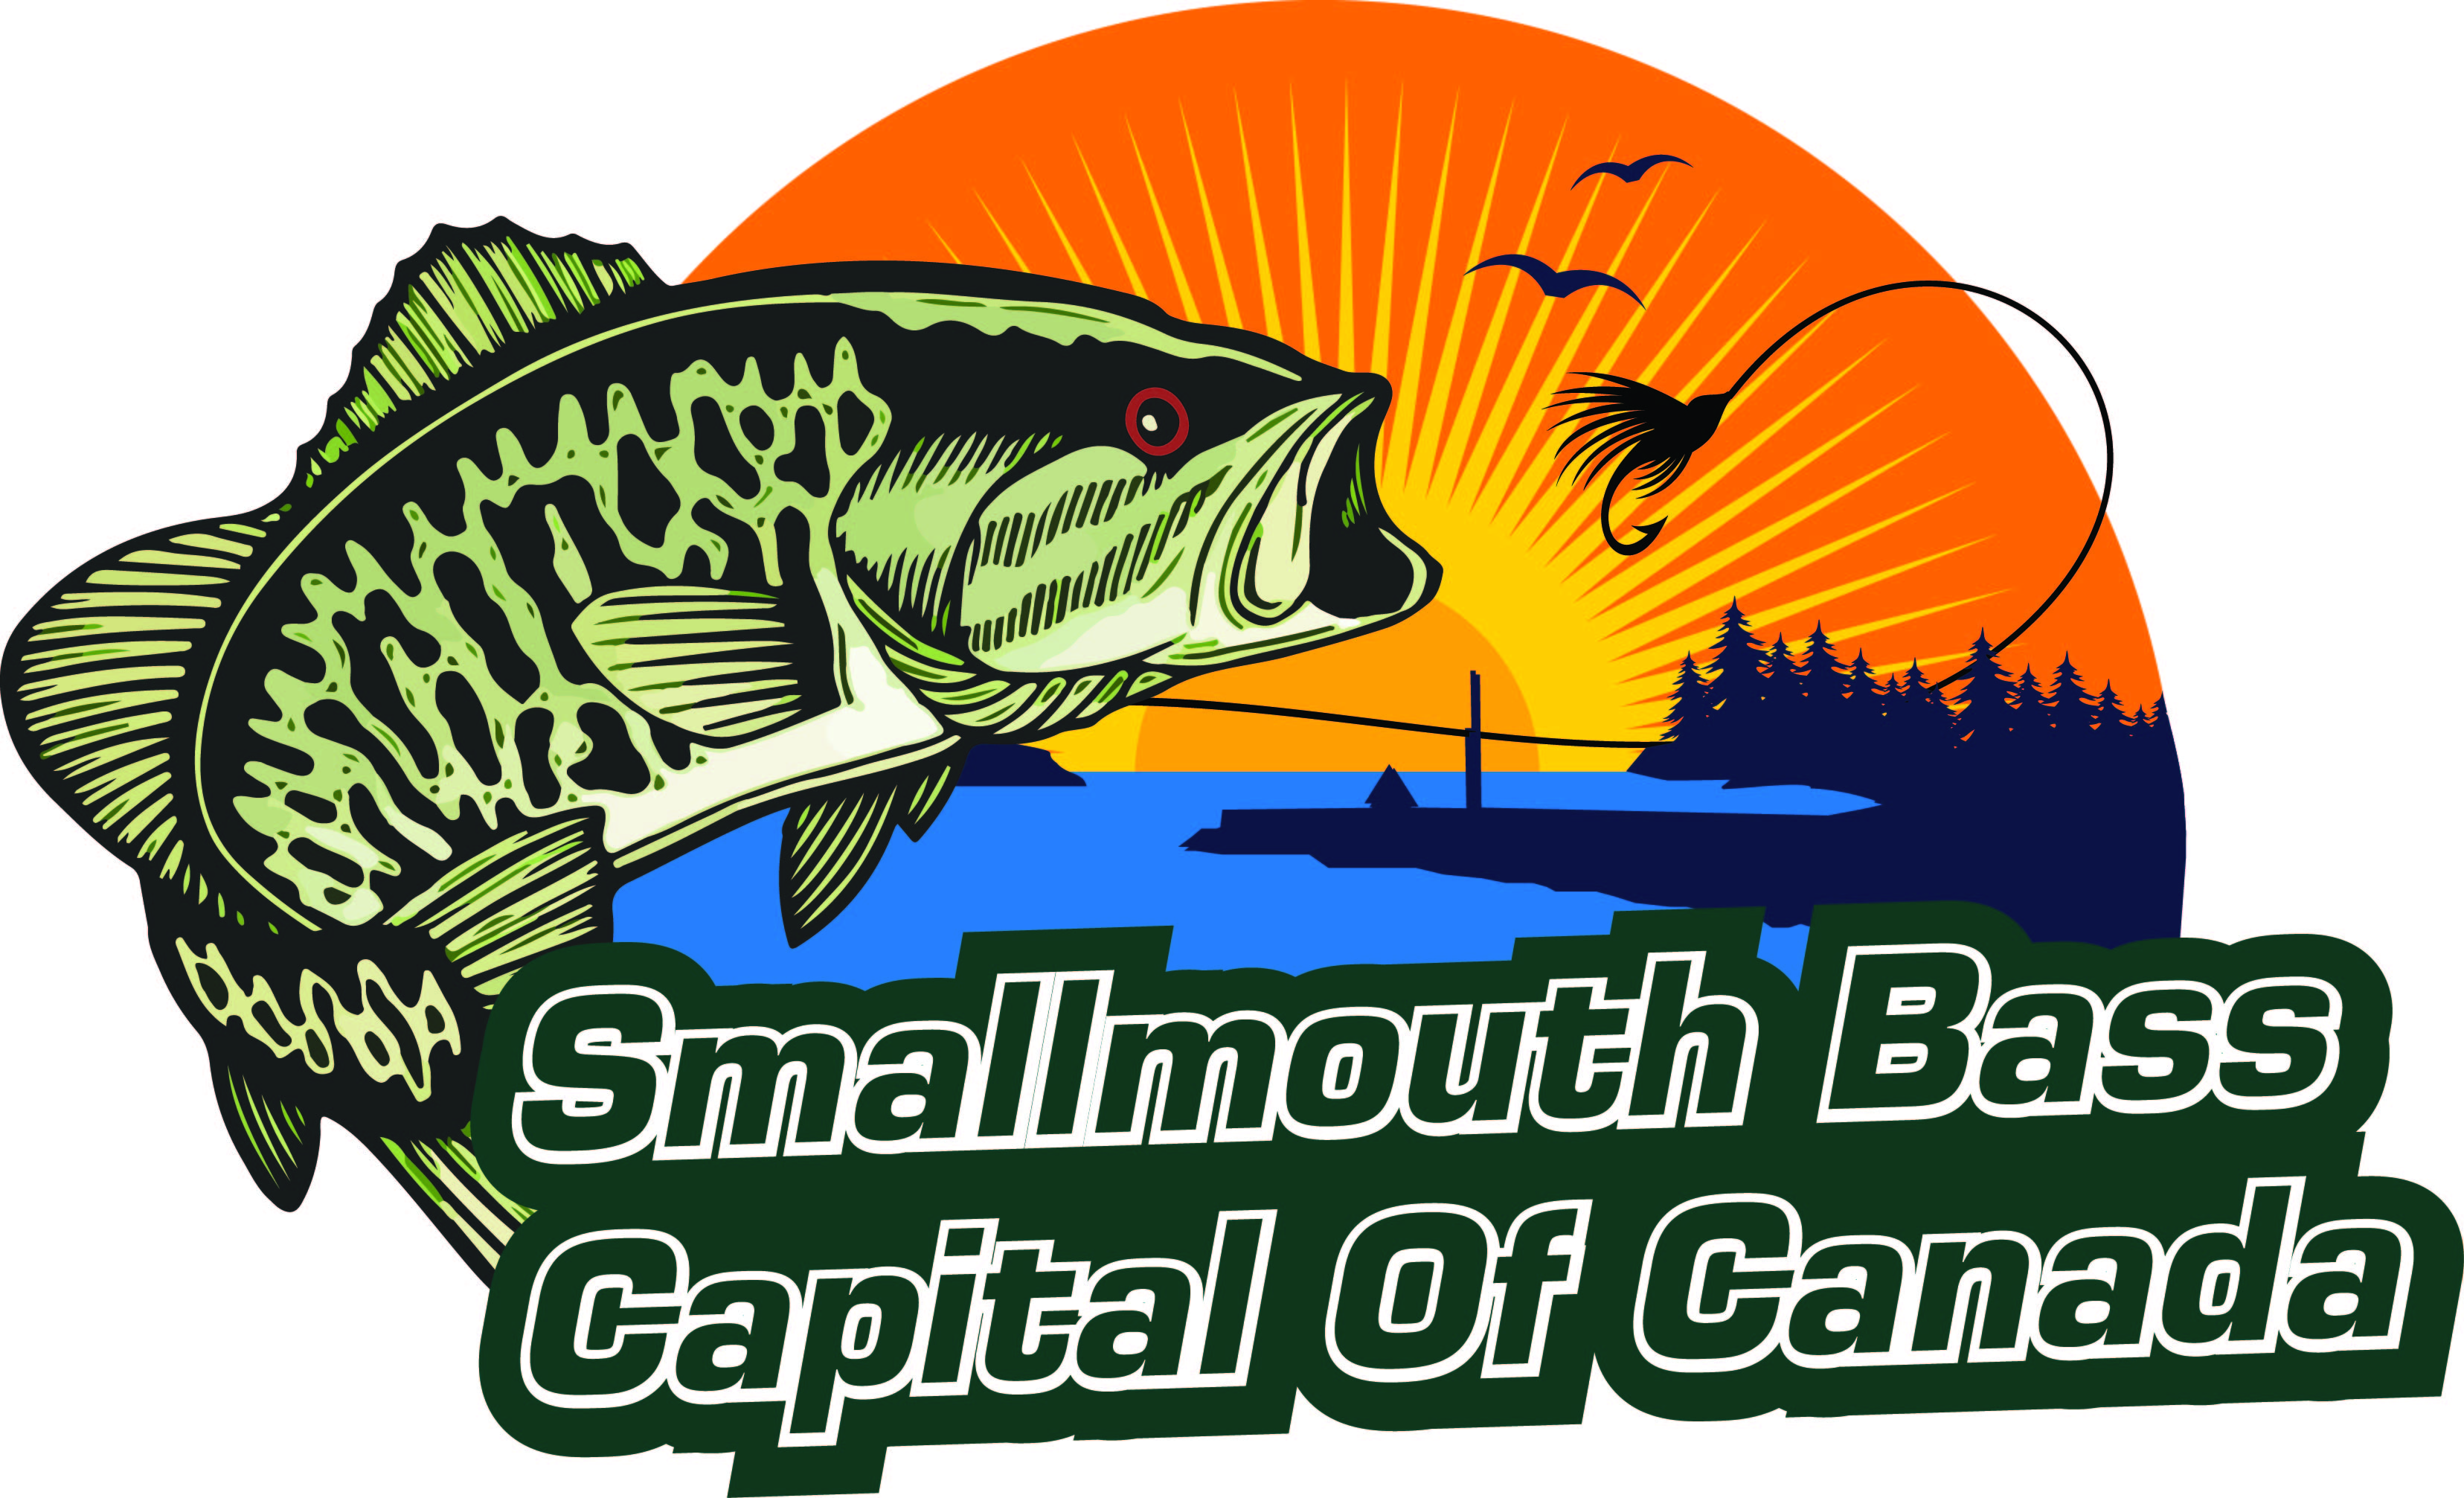 Bassfishing capital of canada logo